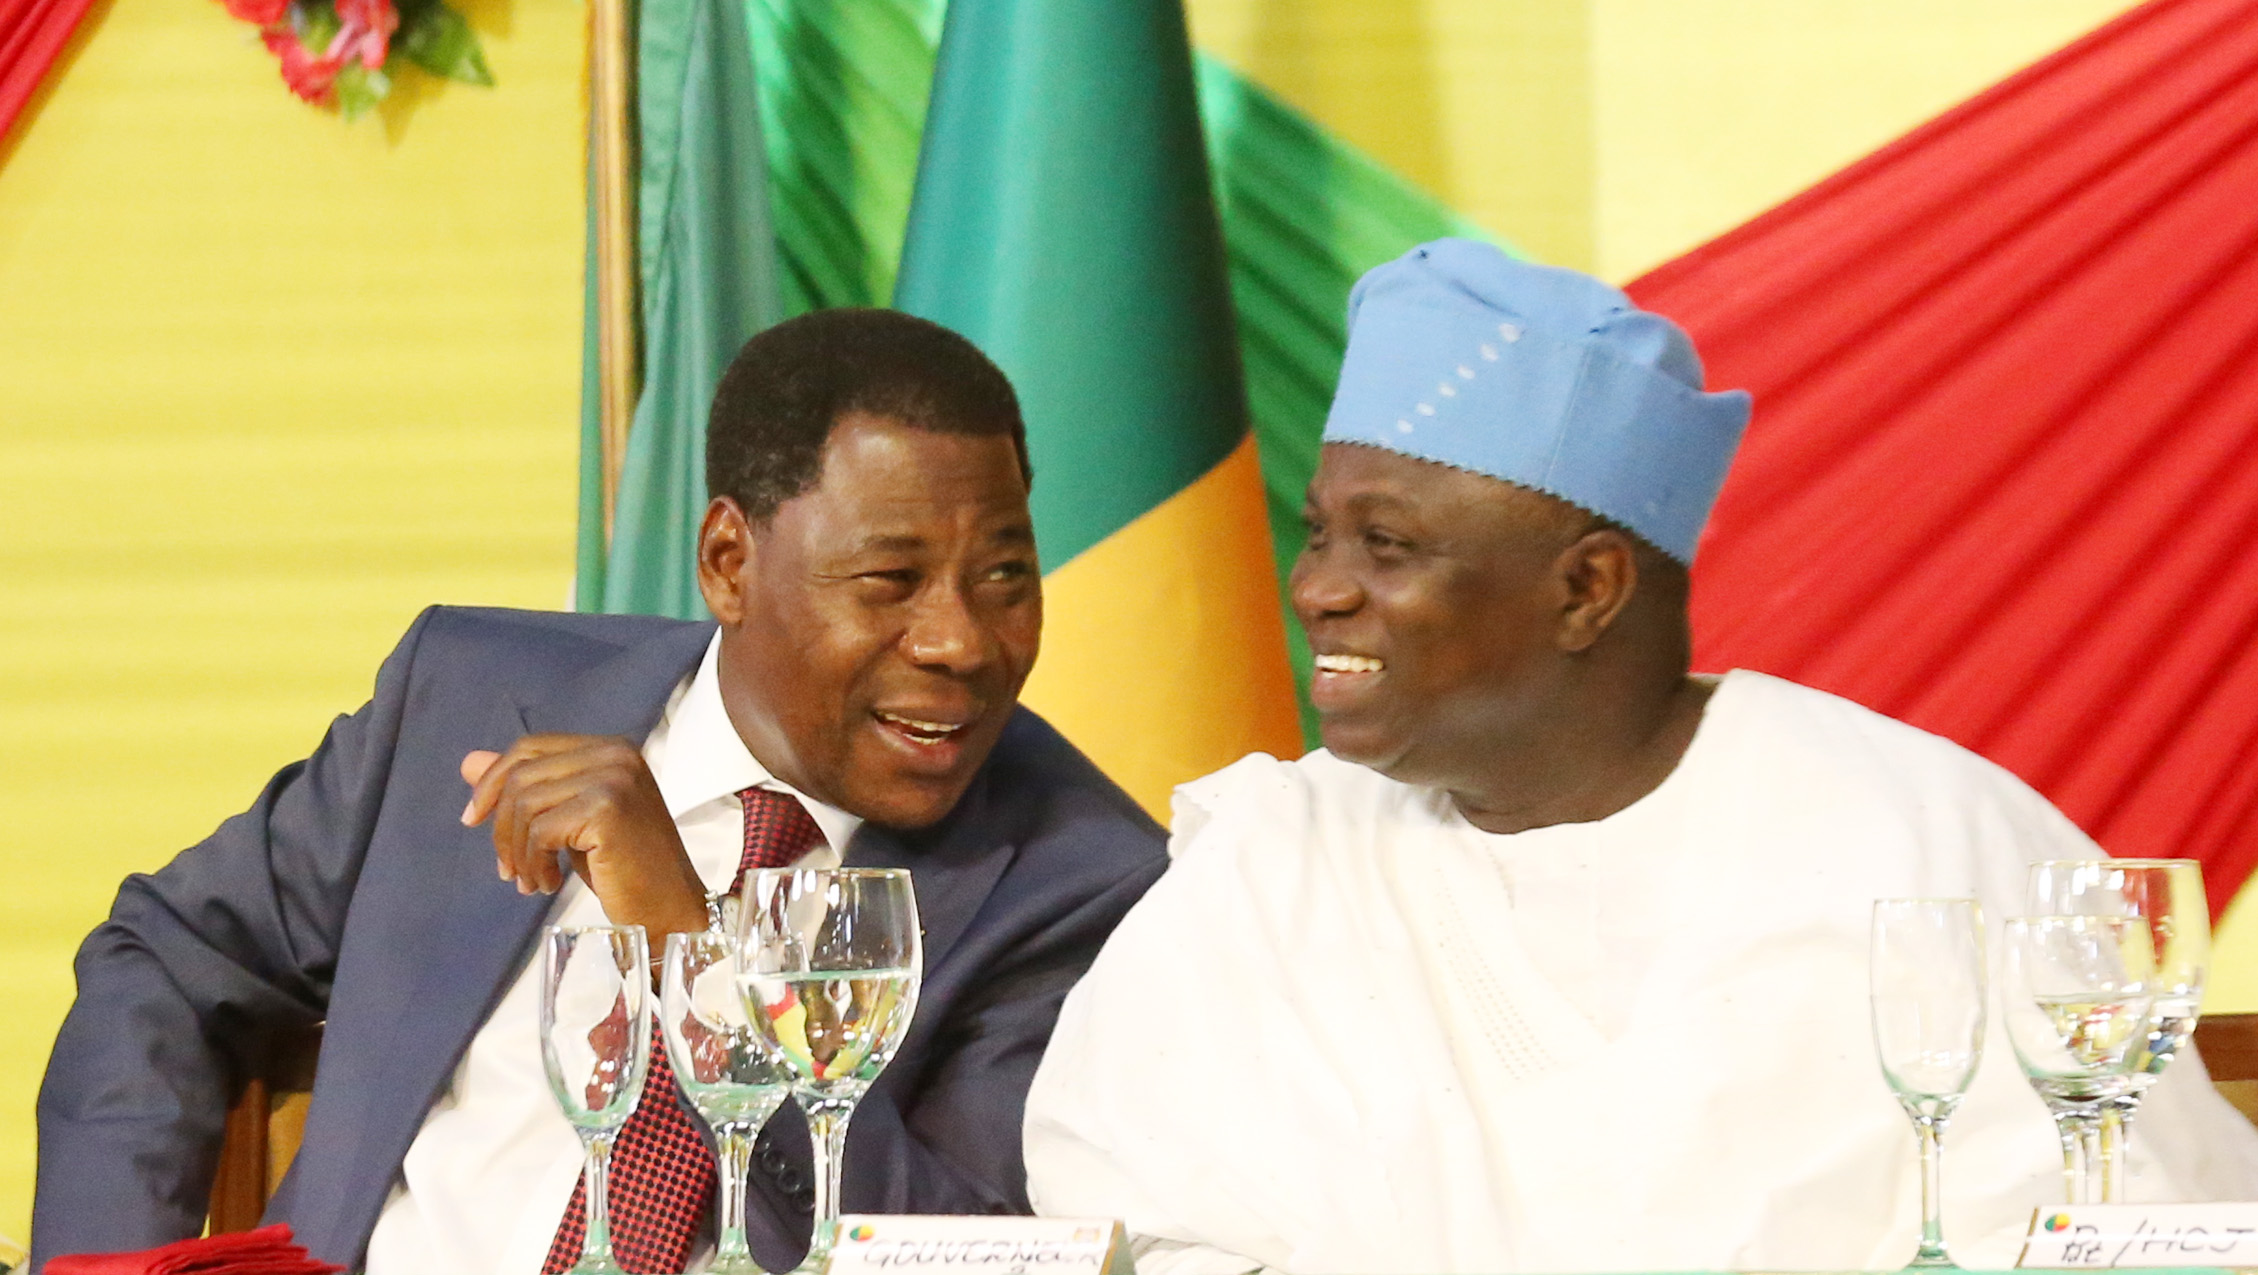 Governor Ambode's Visit to Benin Republic with President Buhari